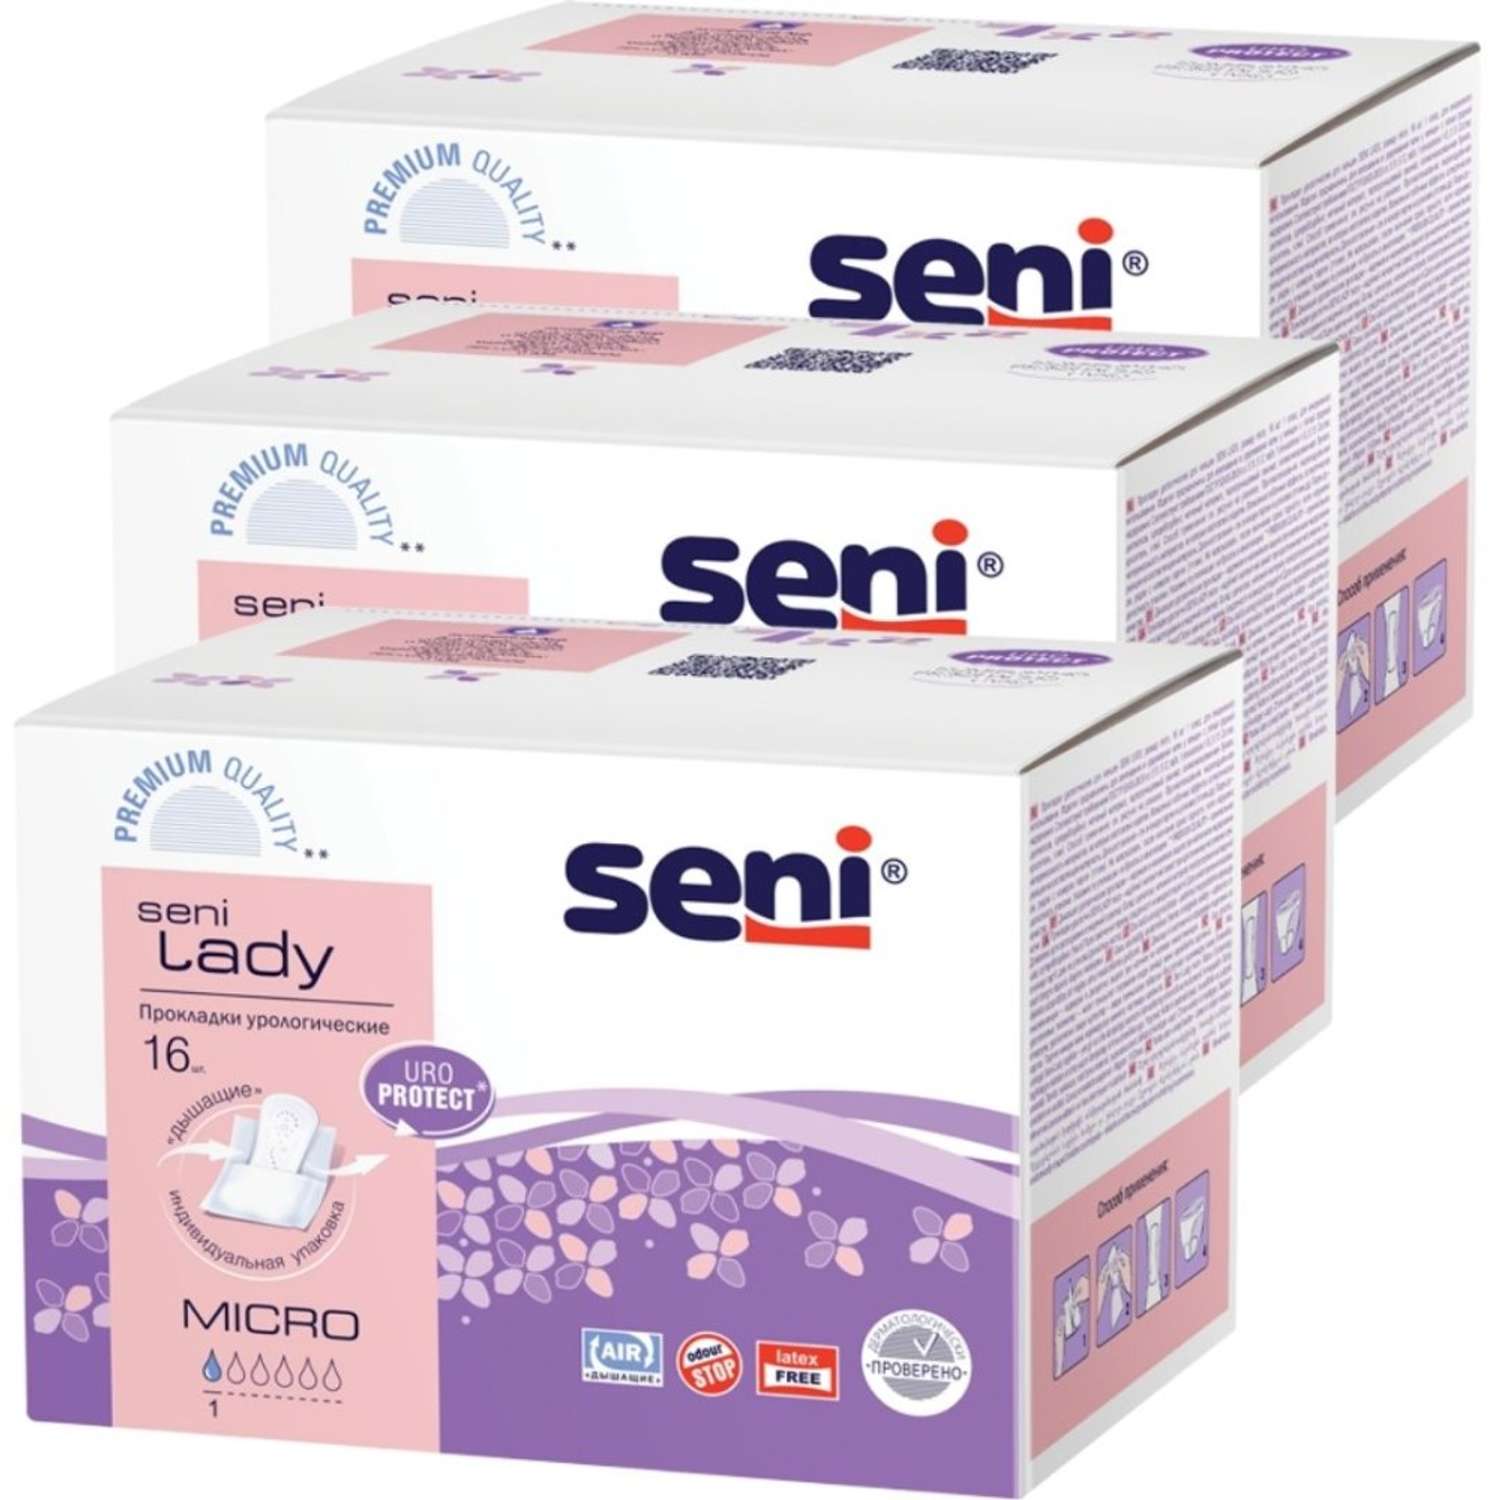 Прокладки урологические SENI Lady micro 3 упаковки по 16 шт - фото 1